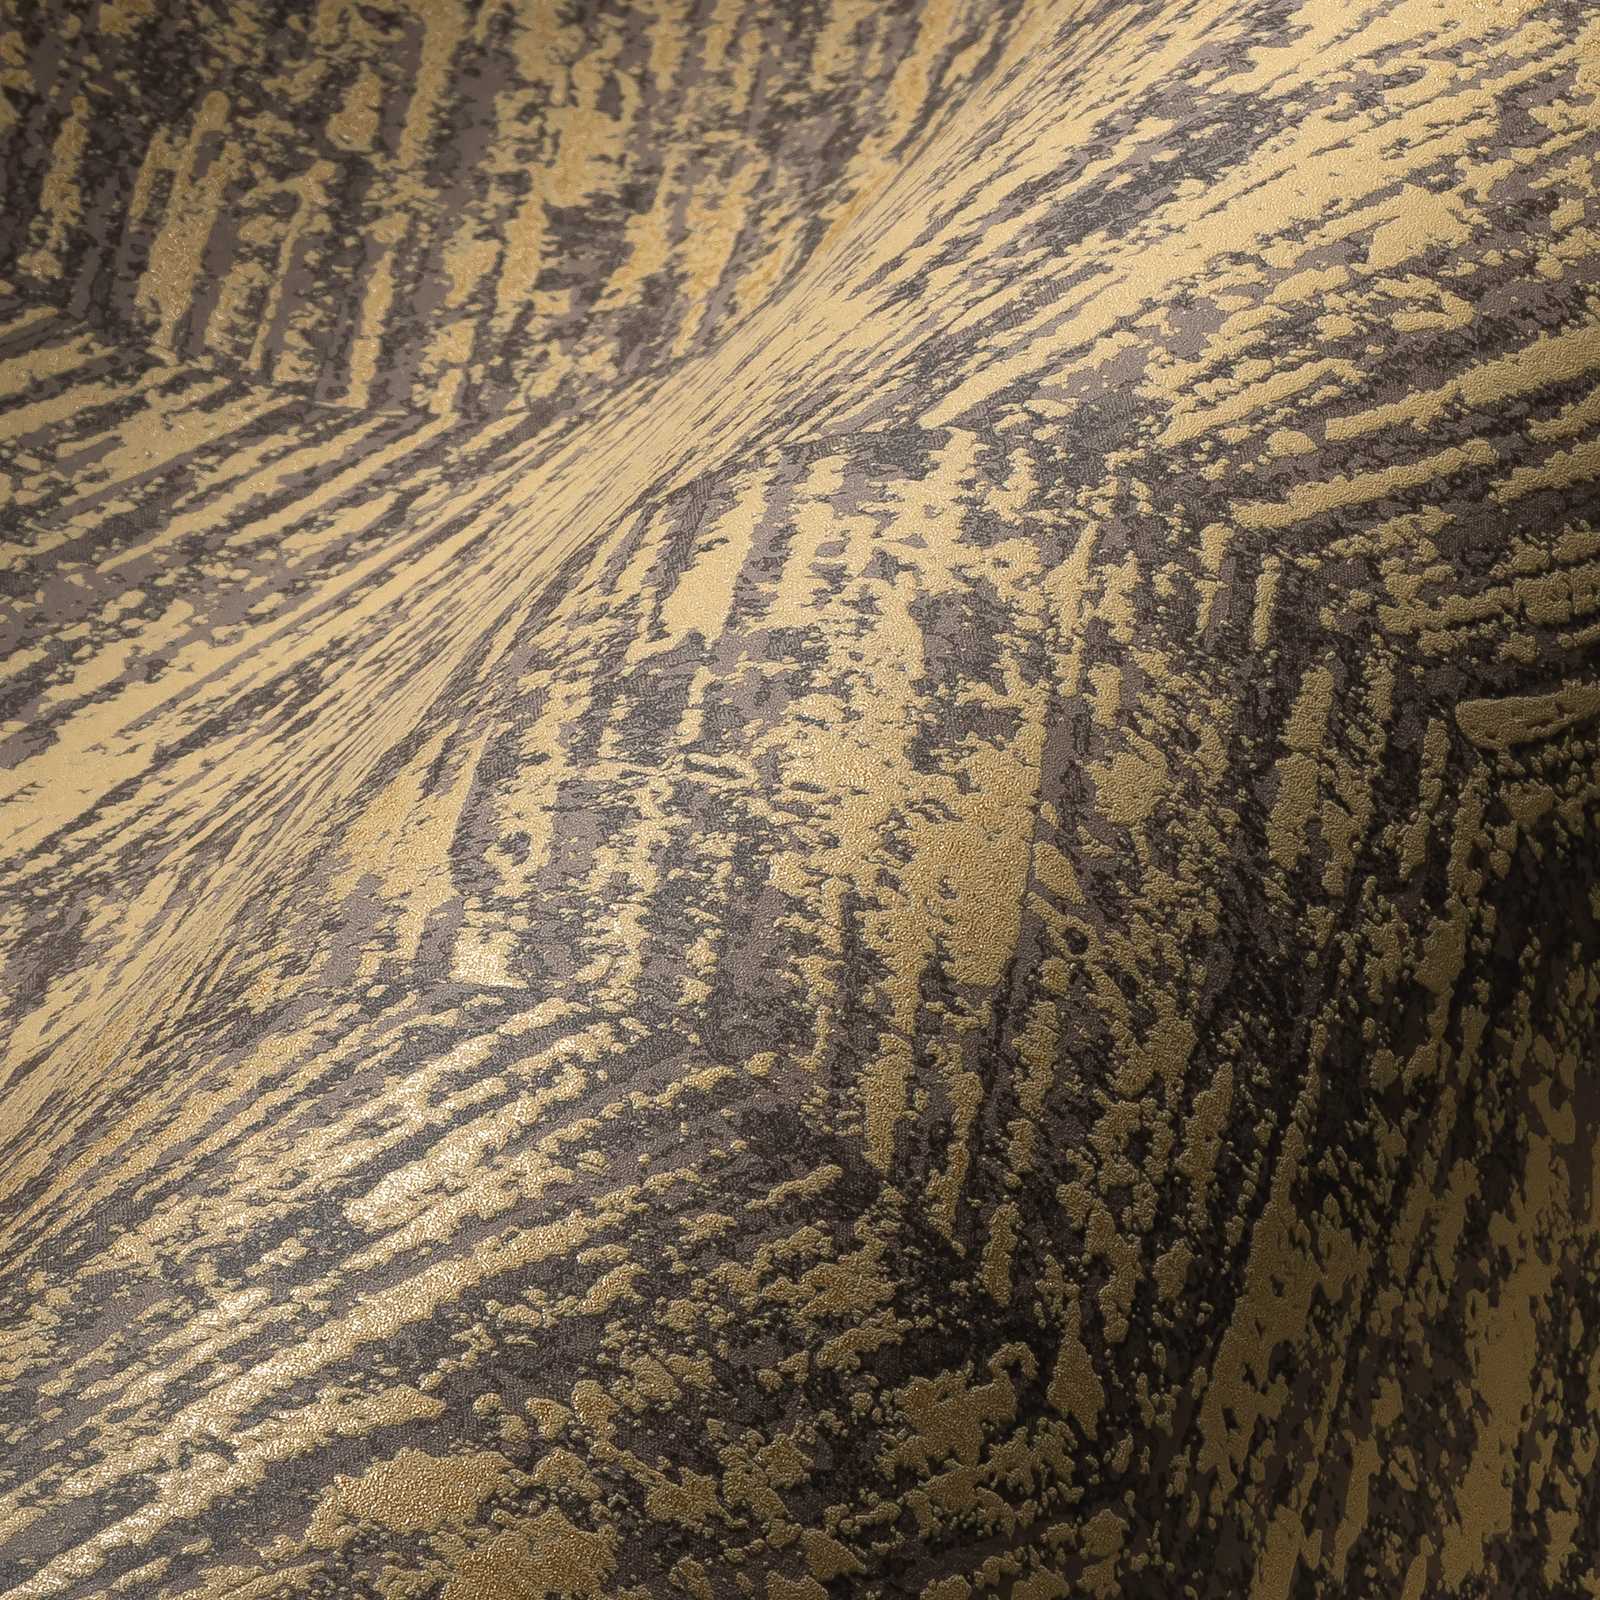             Textured wallpaper ethnic design with stripe effect - brown, metallic
        